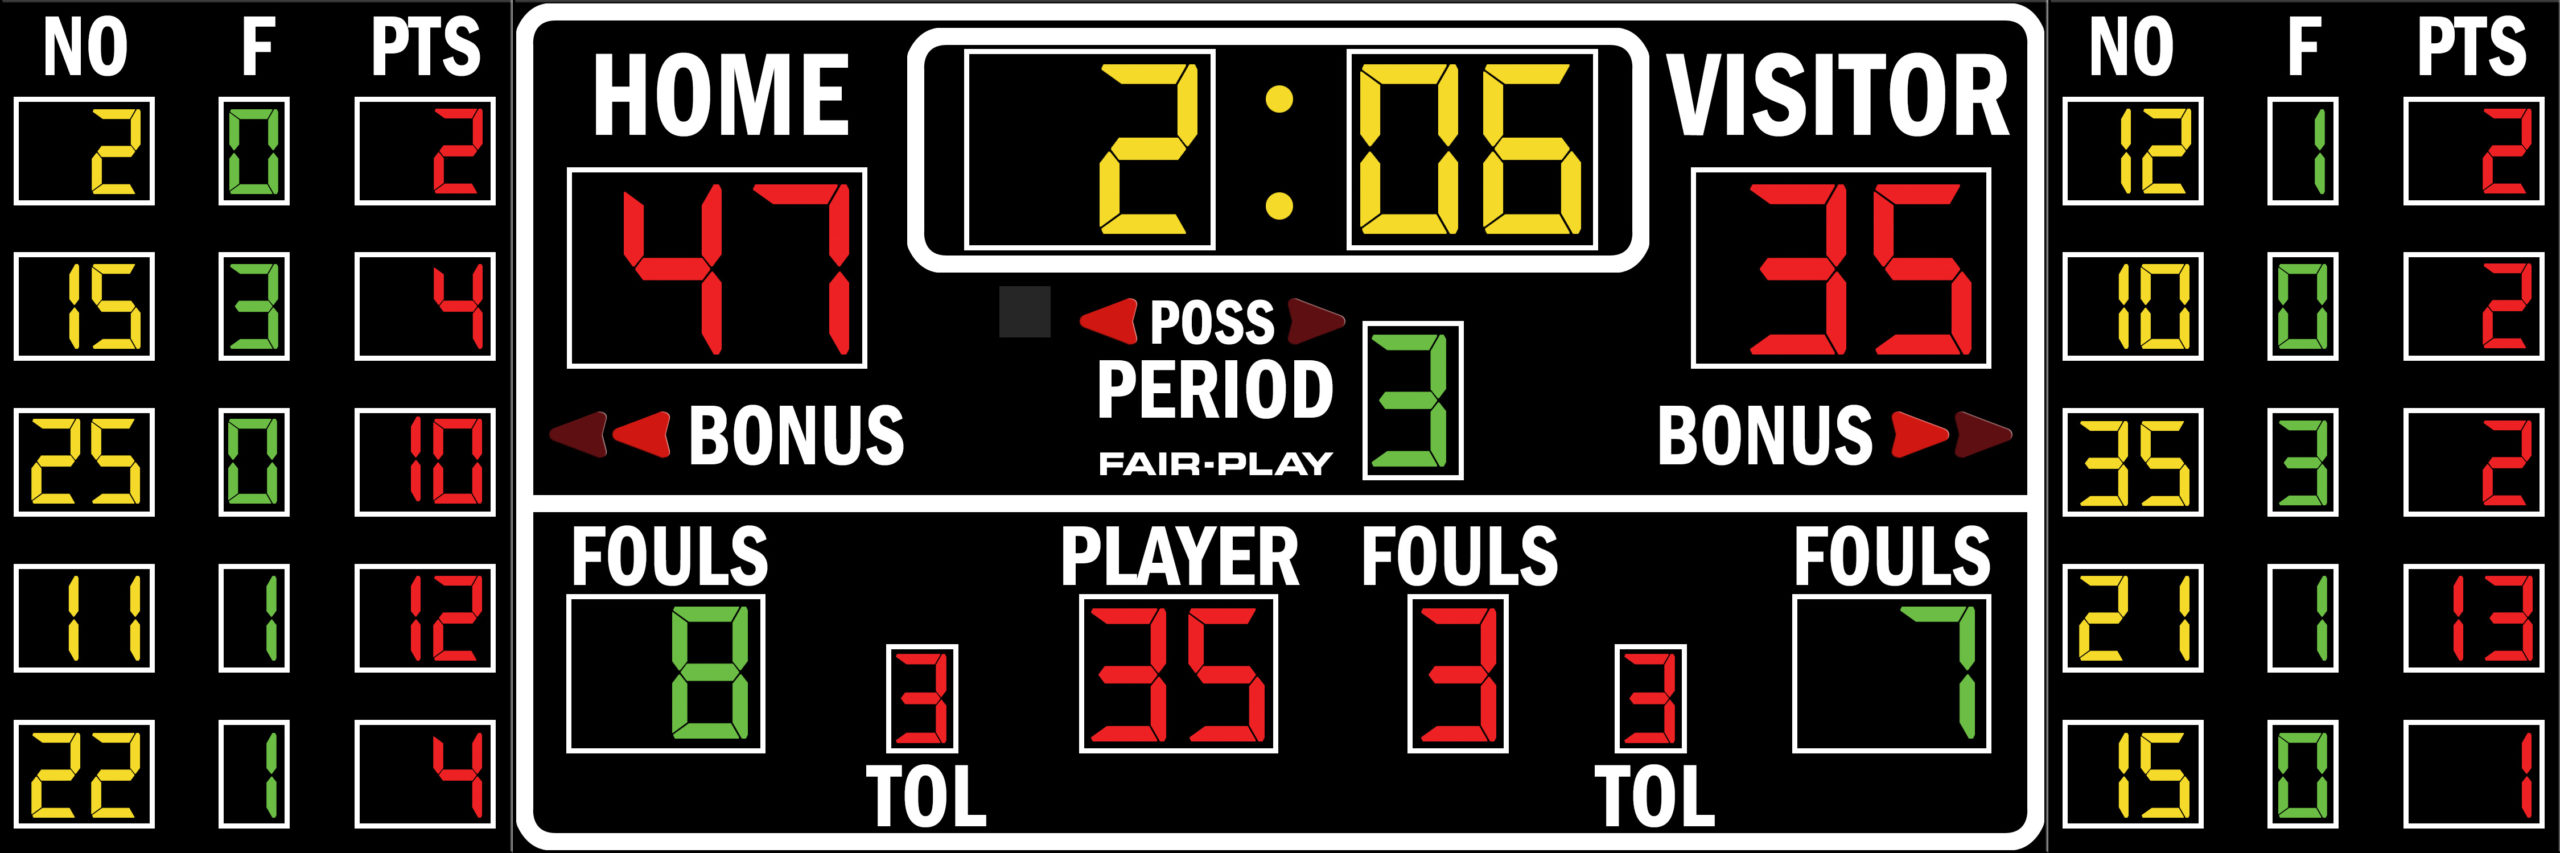 Bb 1665 4 Basketball Scoreboard Fair Play Scoreboards